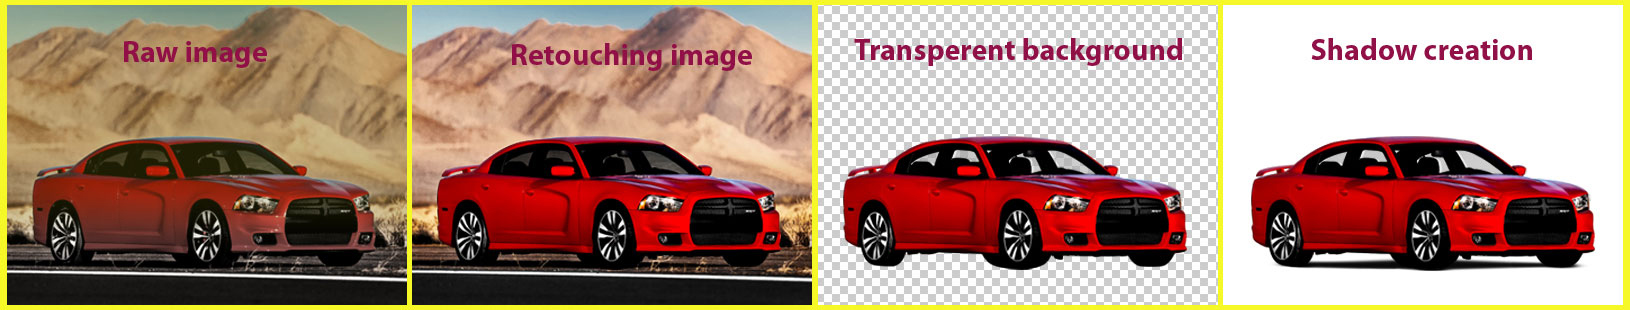 Car image editing service